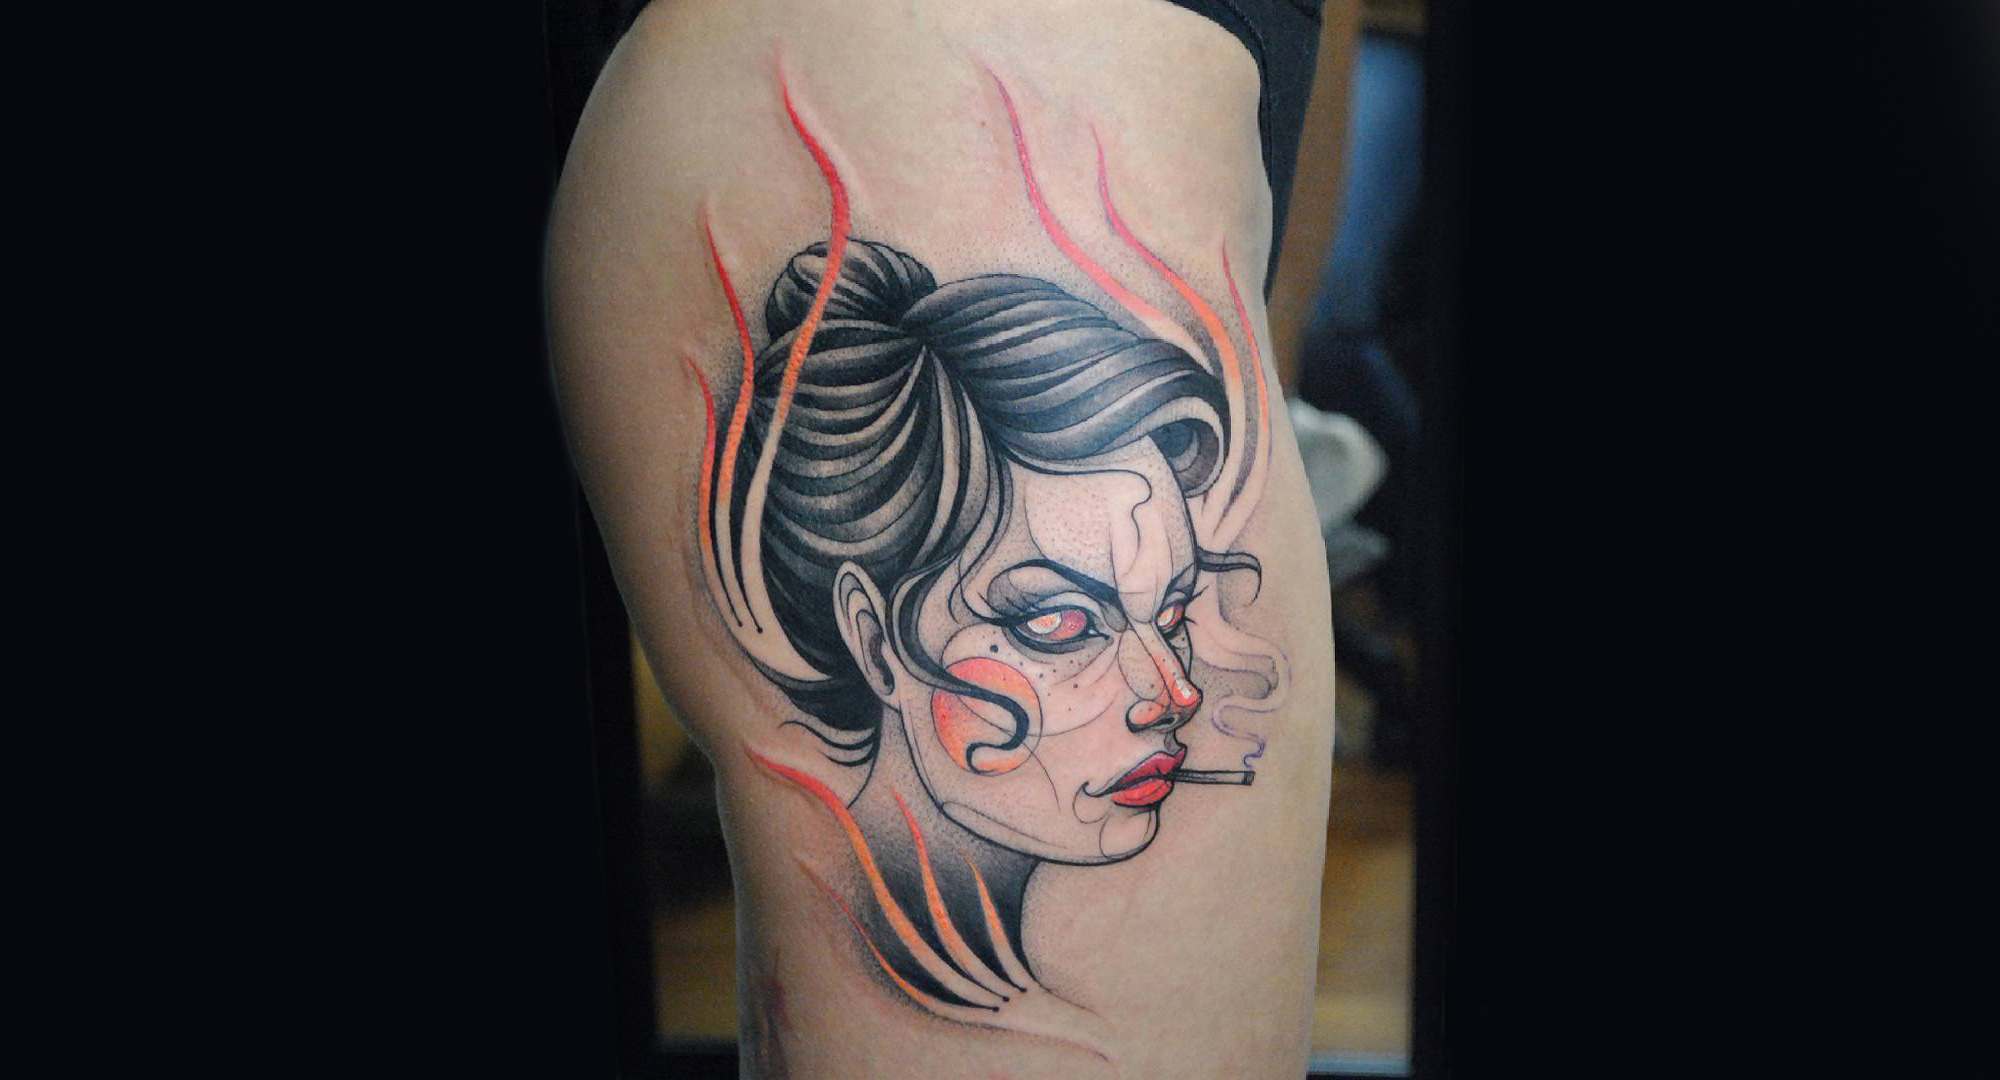 Tattooed portrait of a woman by Kati Berinkey